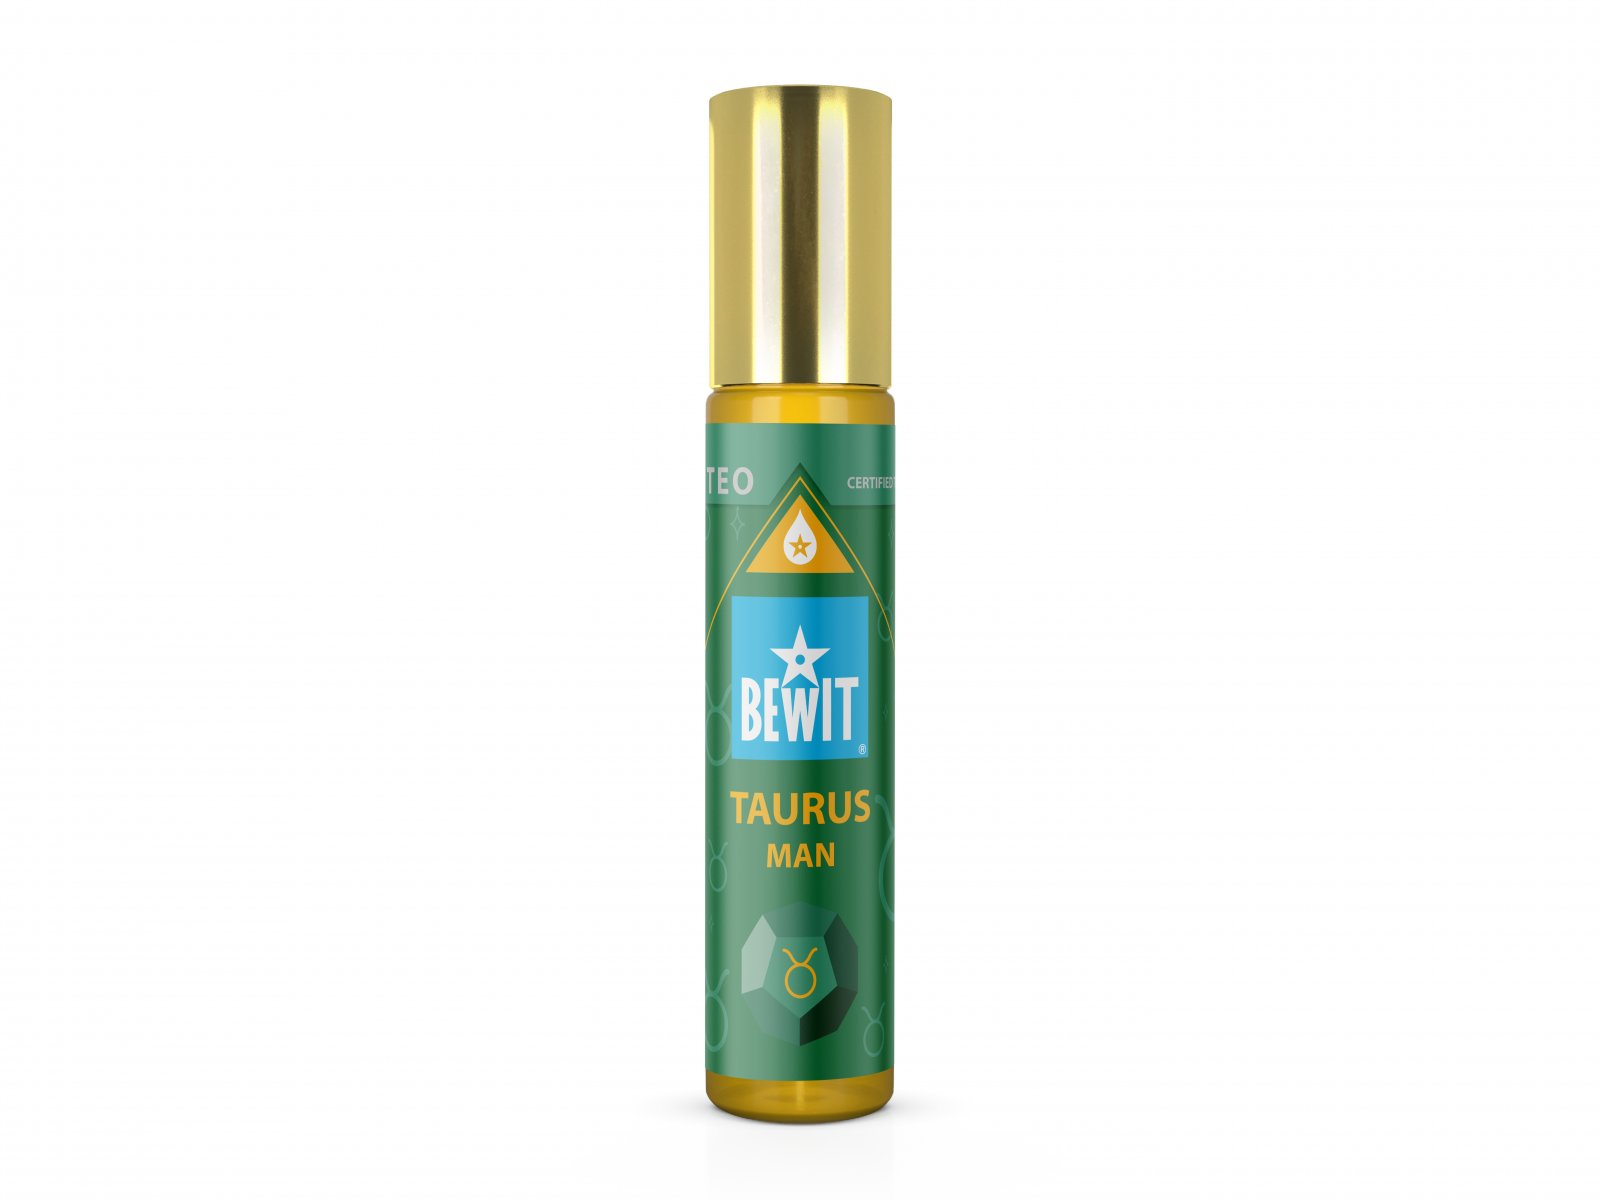 BEWIT® MAN TAURUS (BULL) - Men's roll-on oil perfume